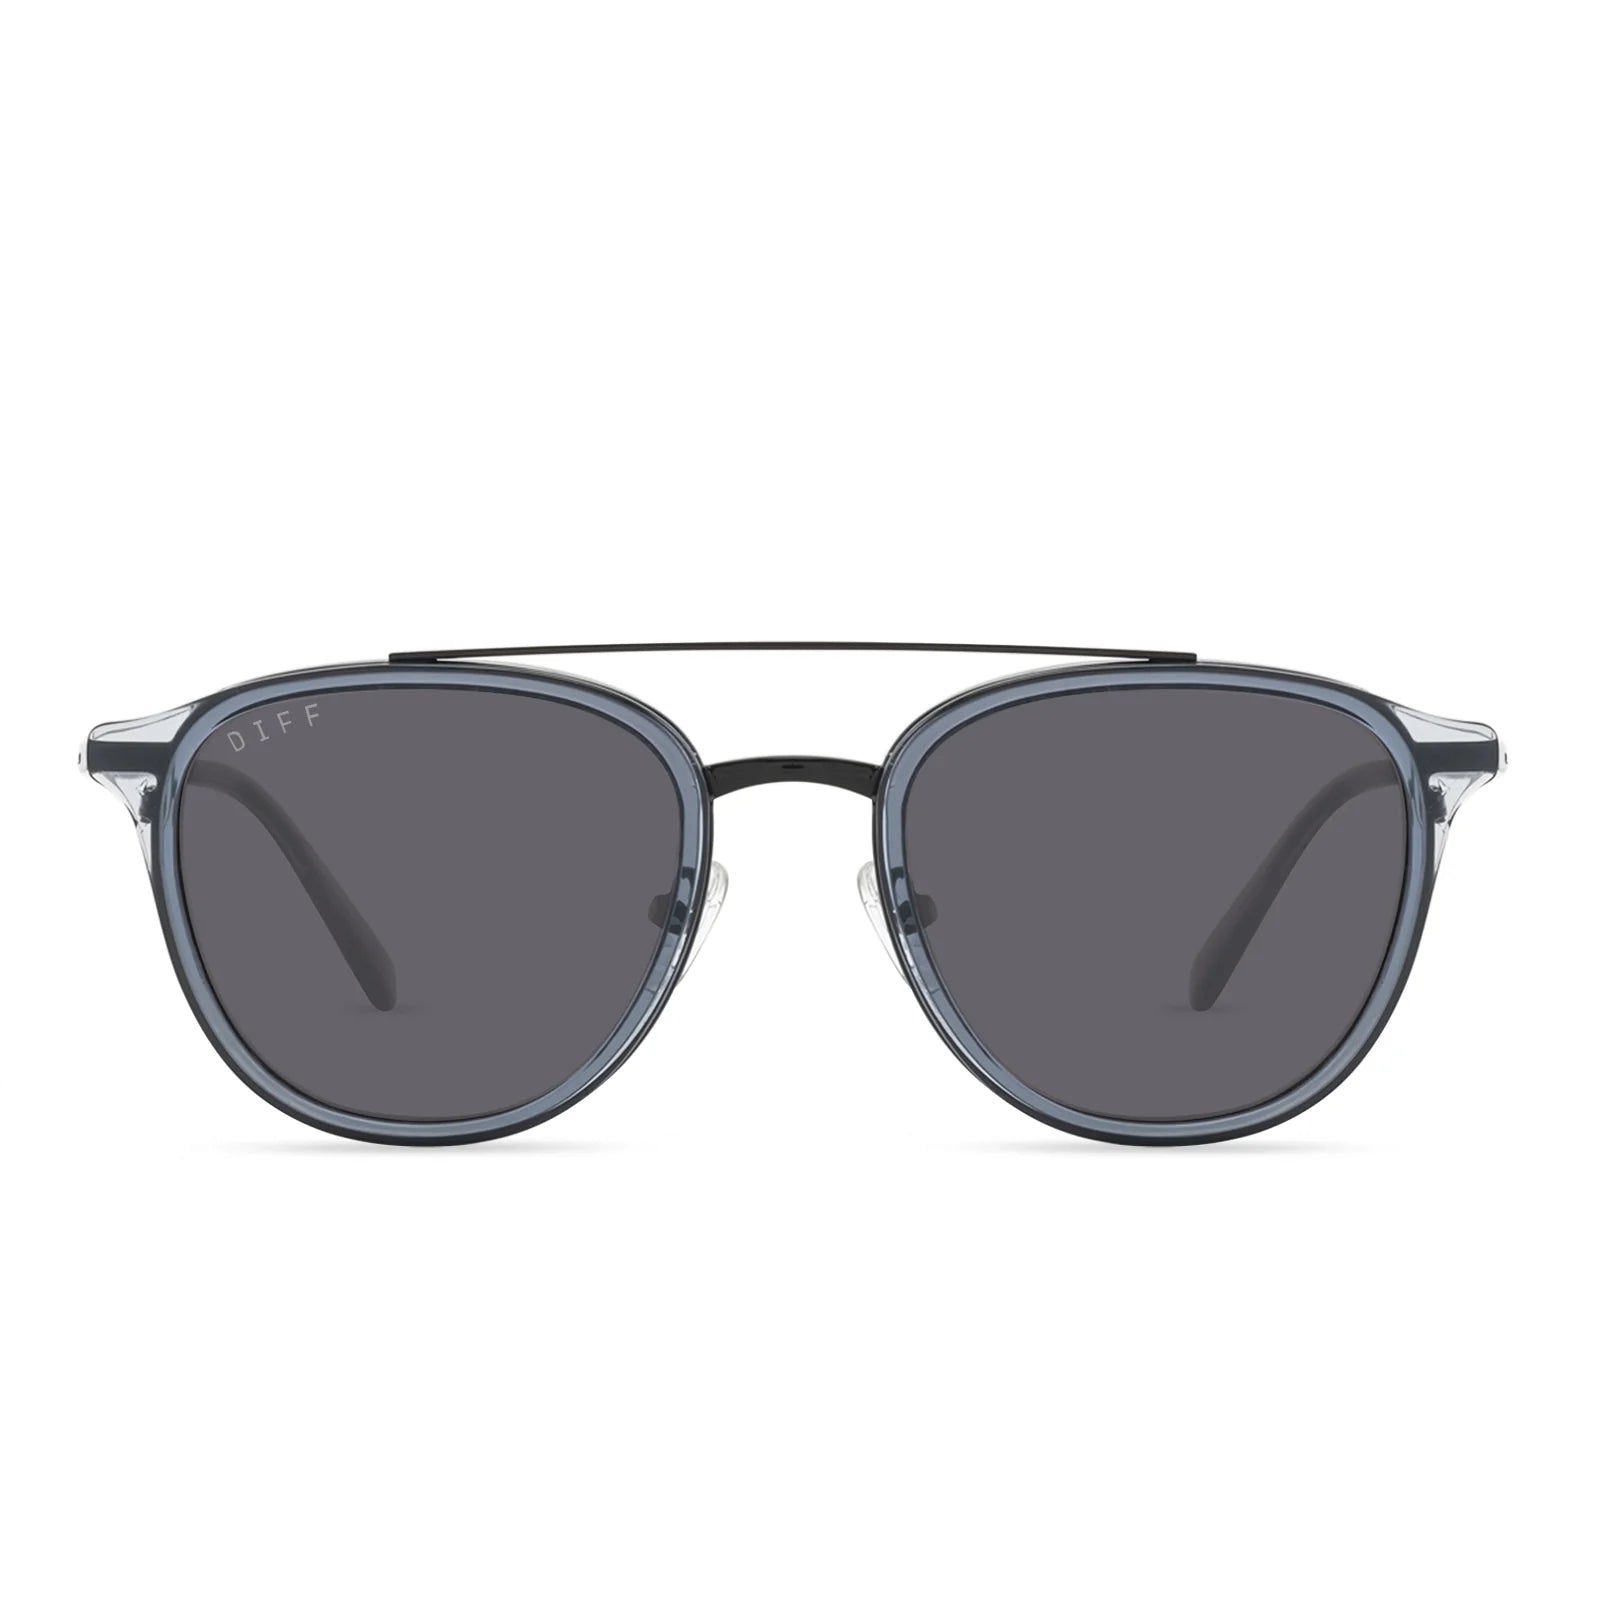 Camden Sunglasses Sunglasses Diff Eyewear Night Sky Grey Polarized  